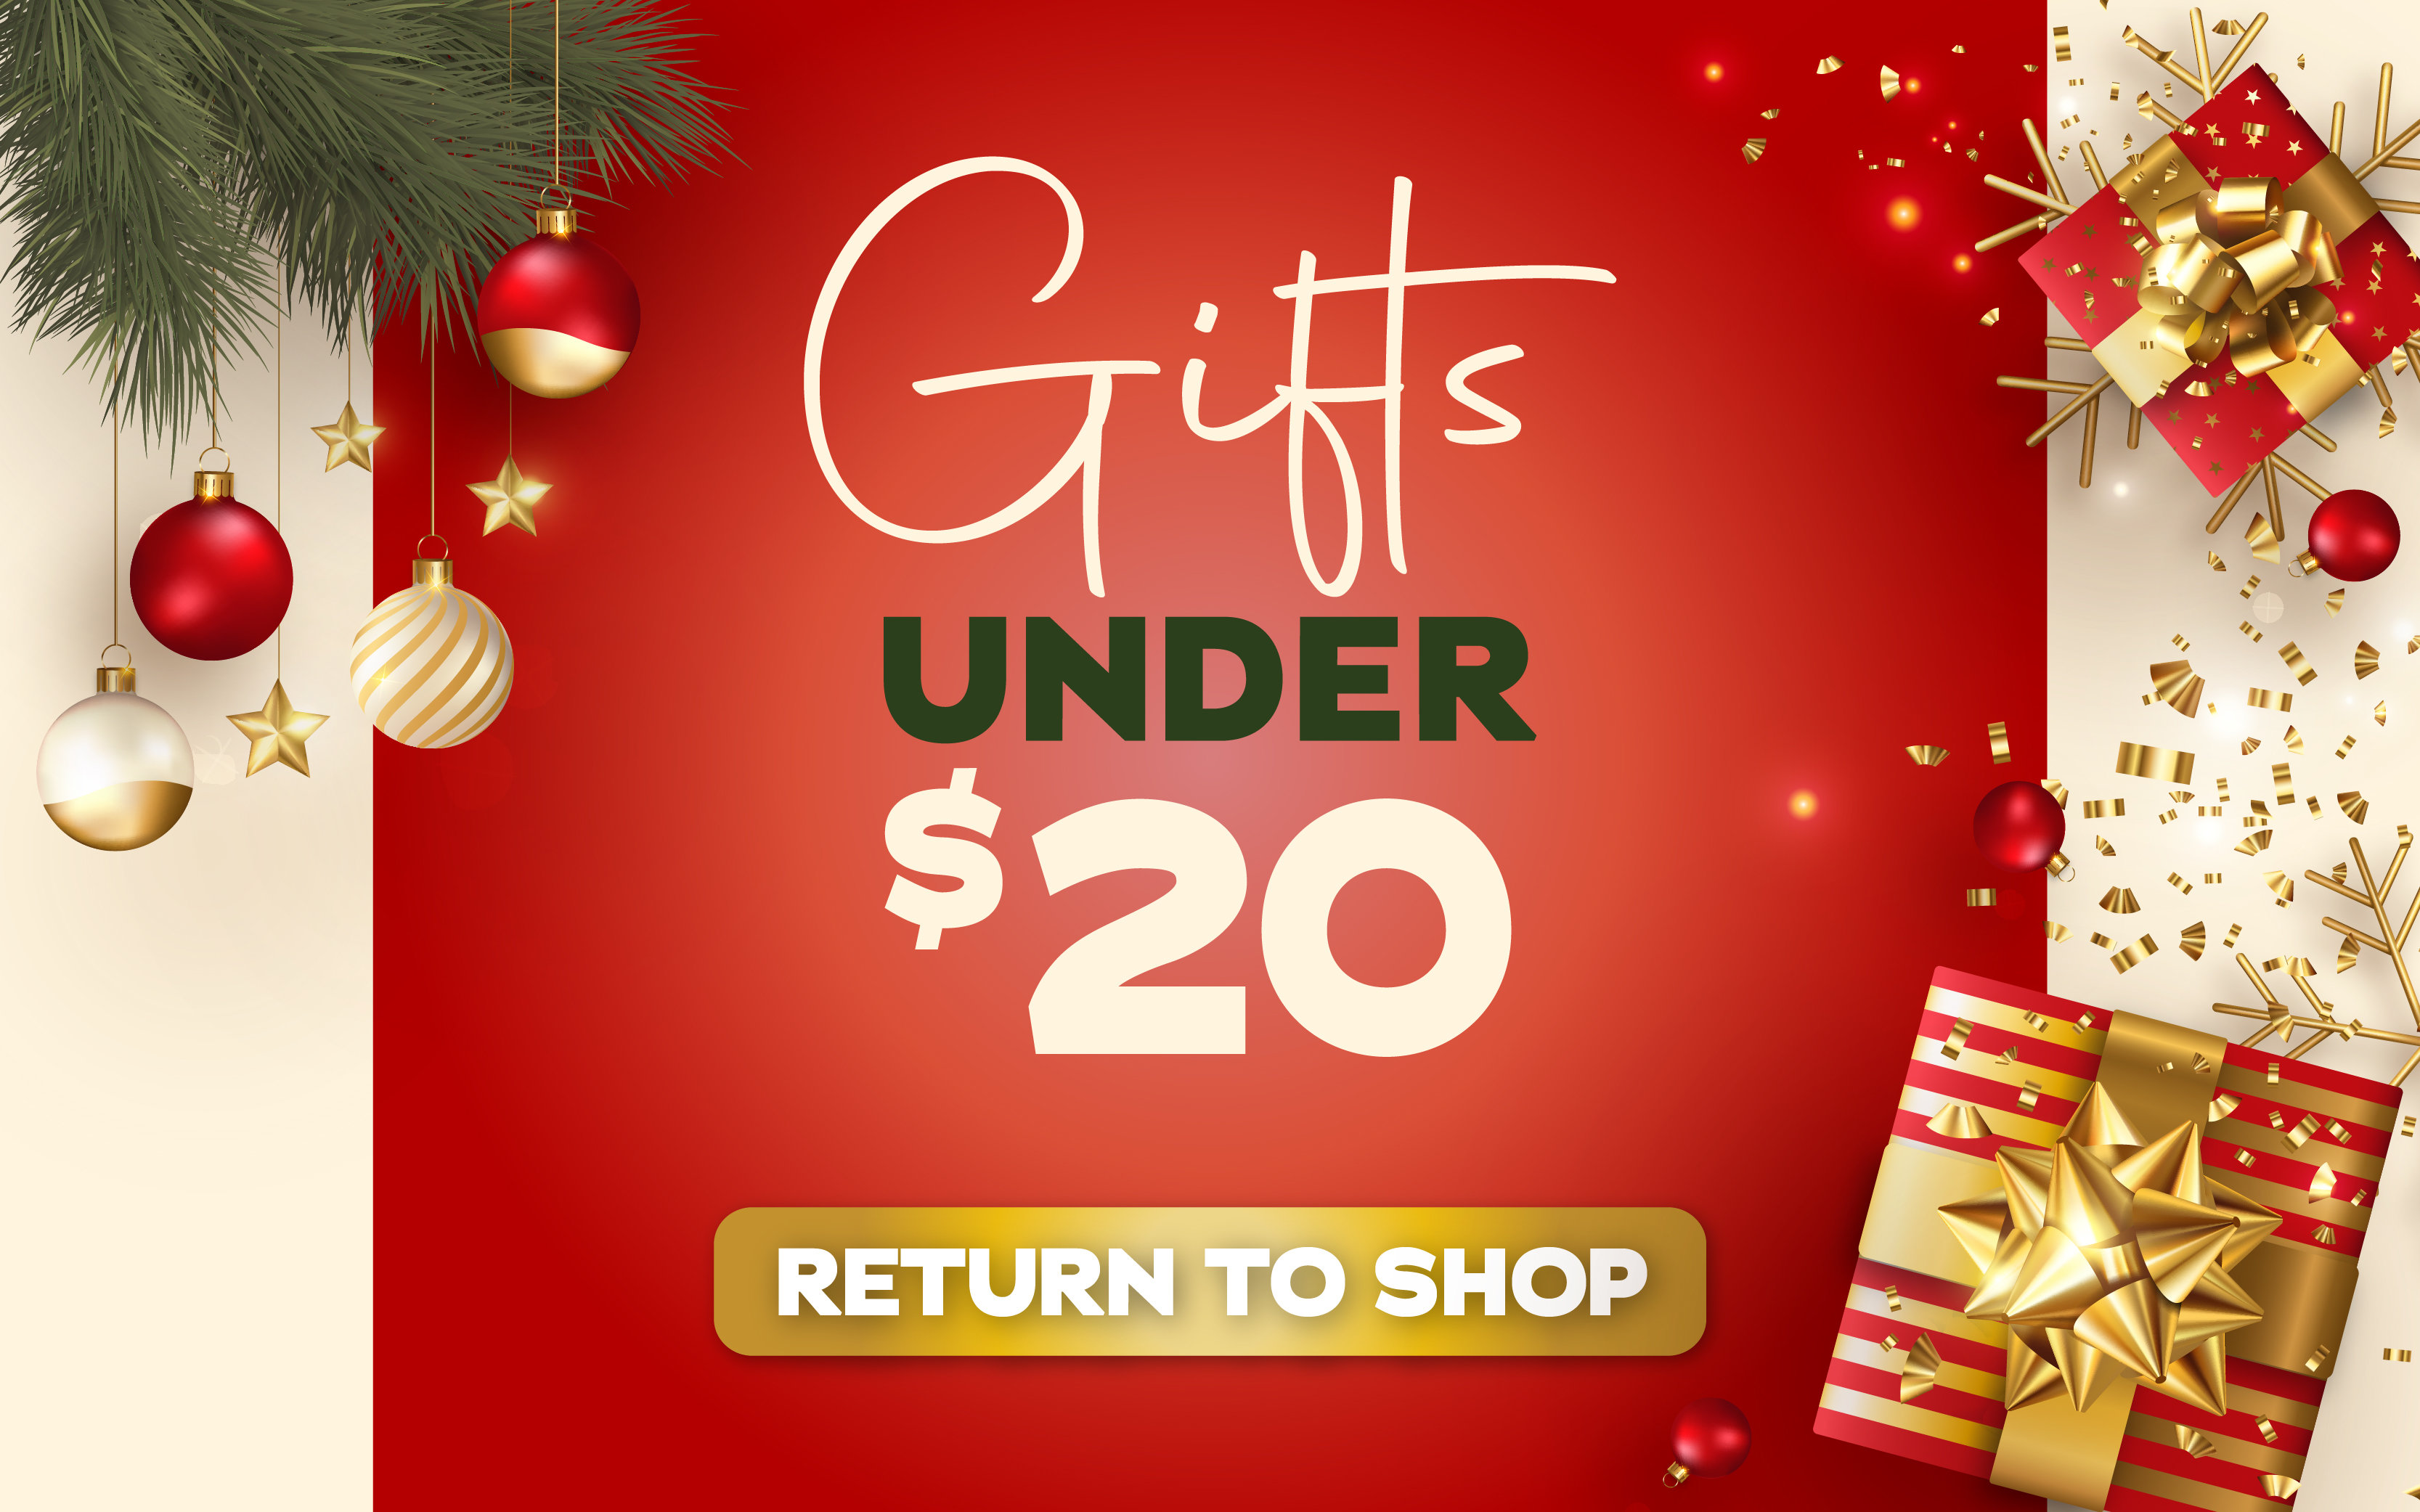 Gifts Under $20 - Return to Shop